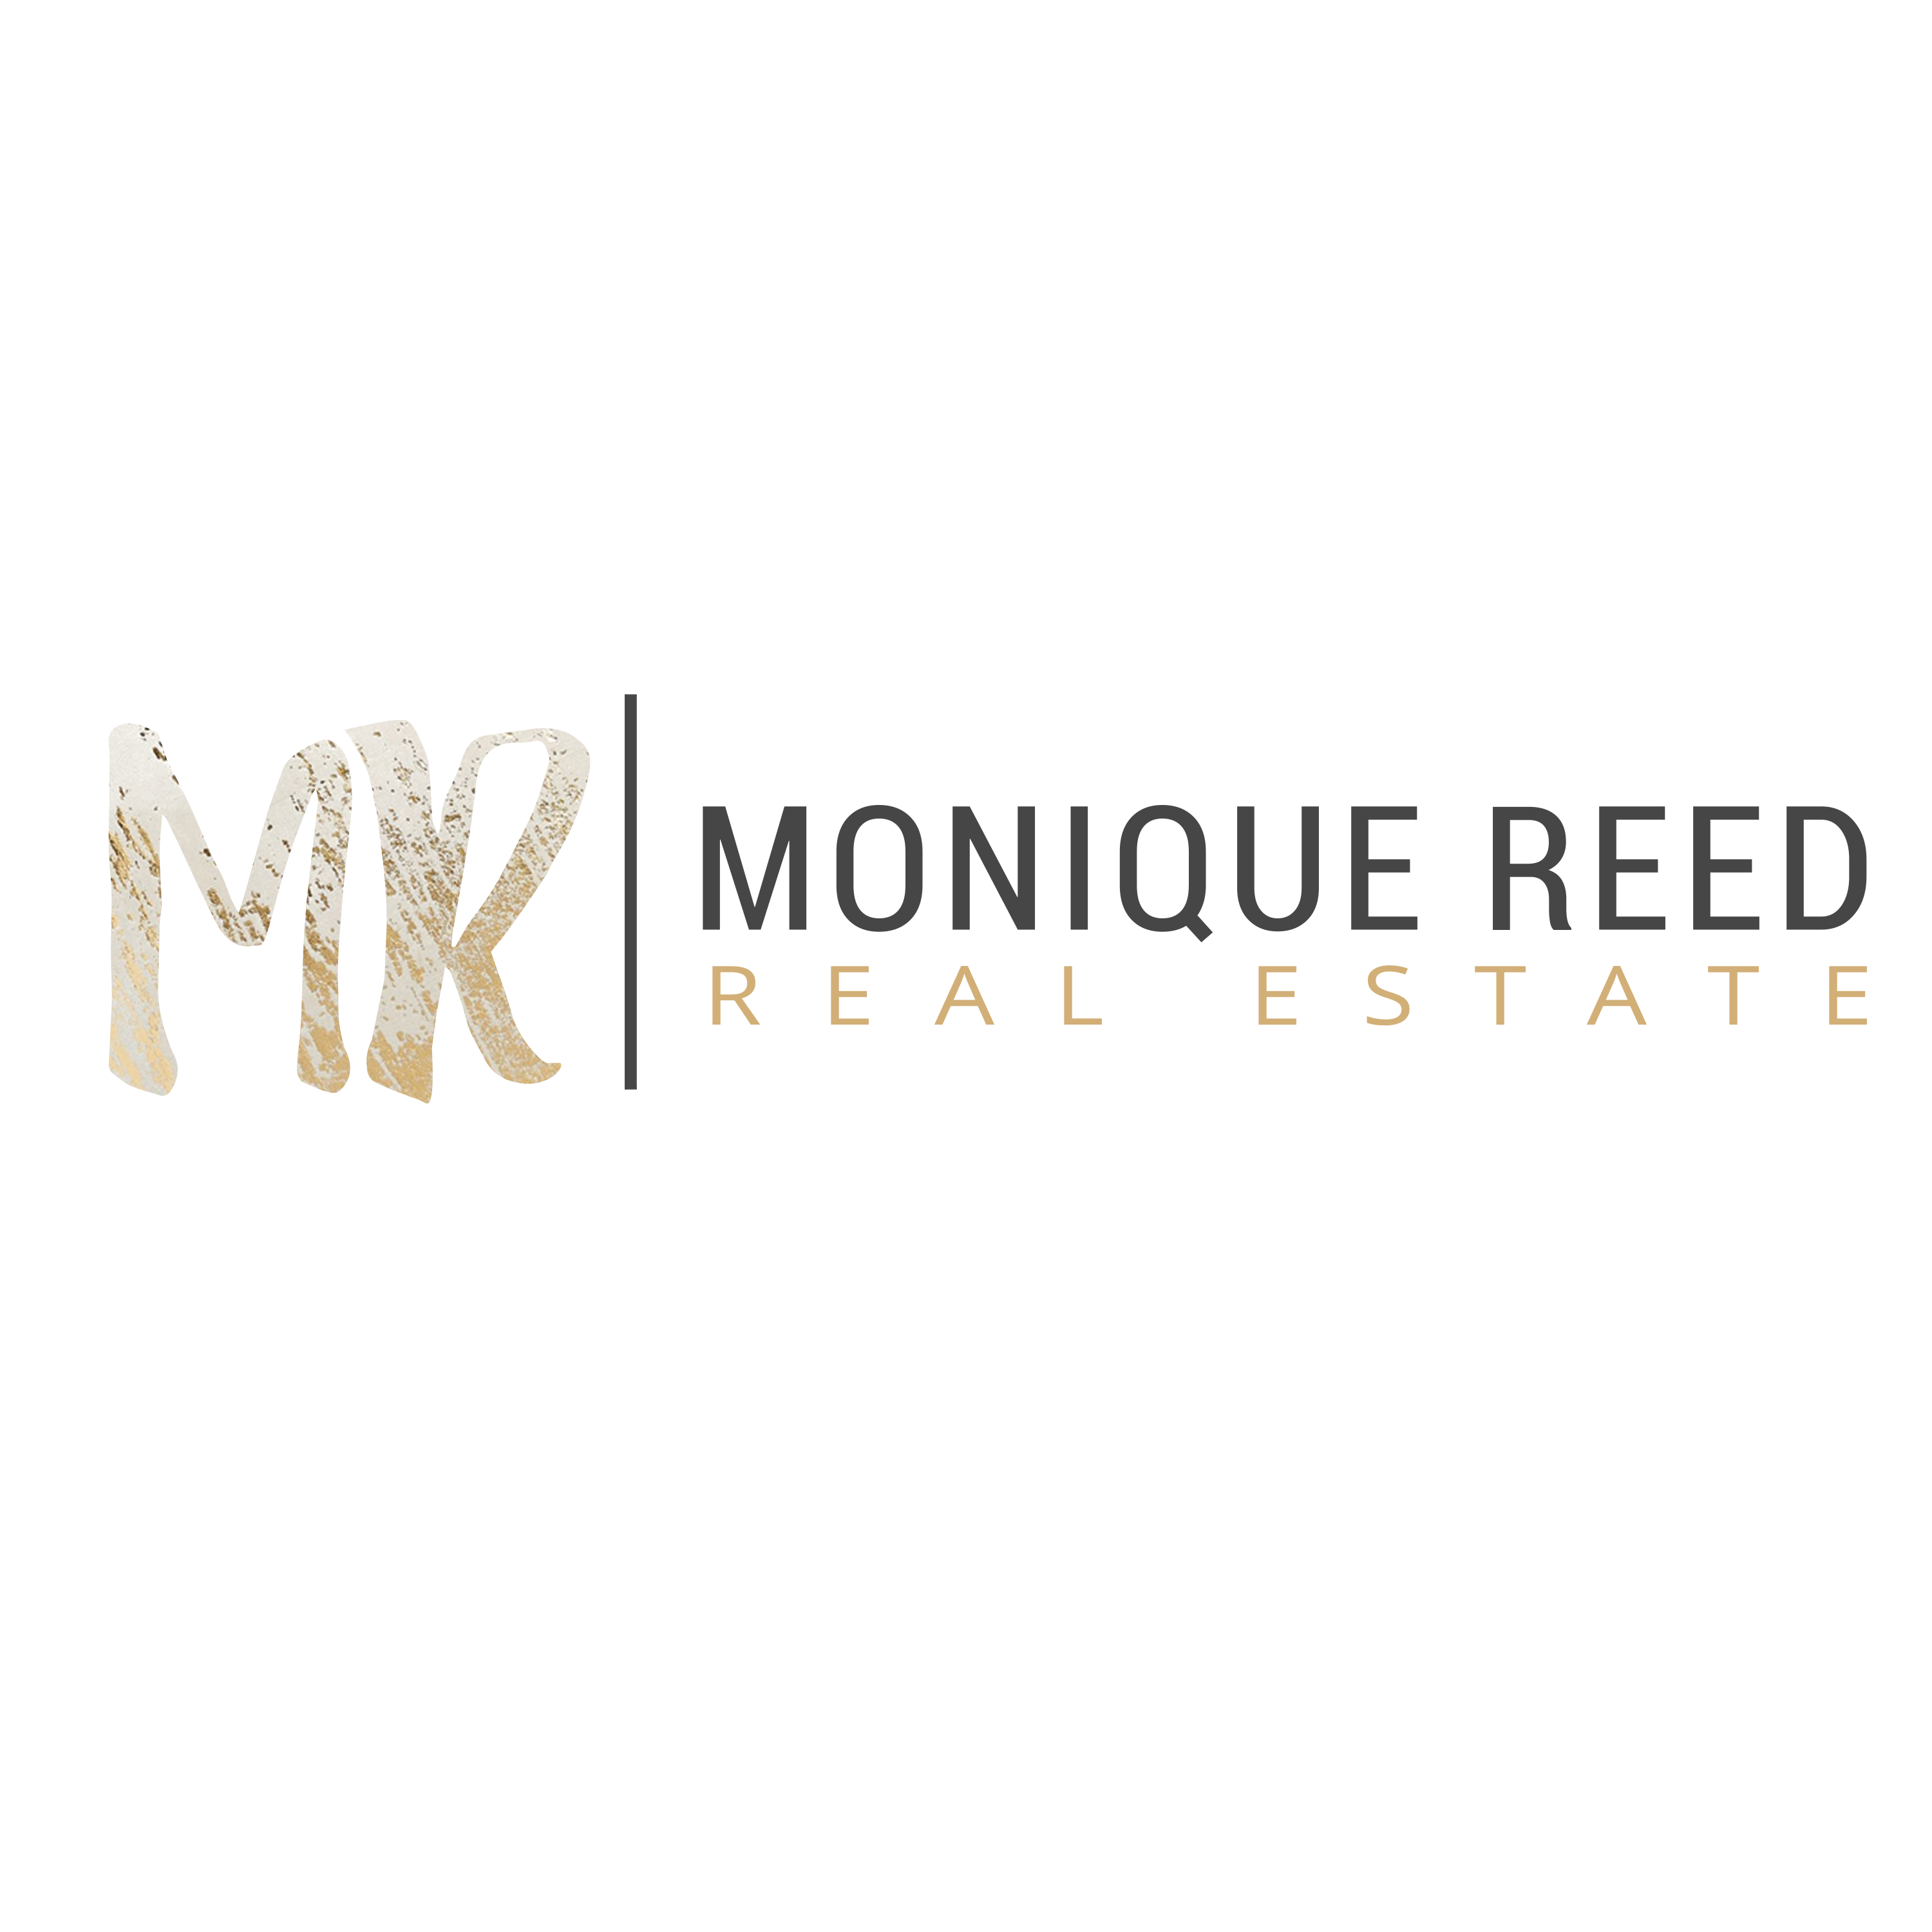 Monique Reed Real Estate